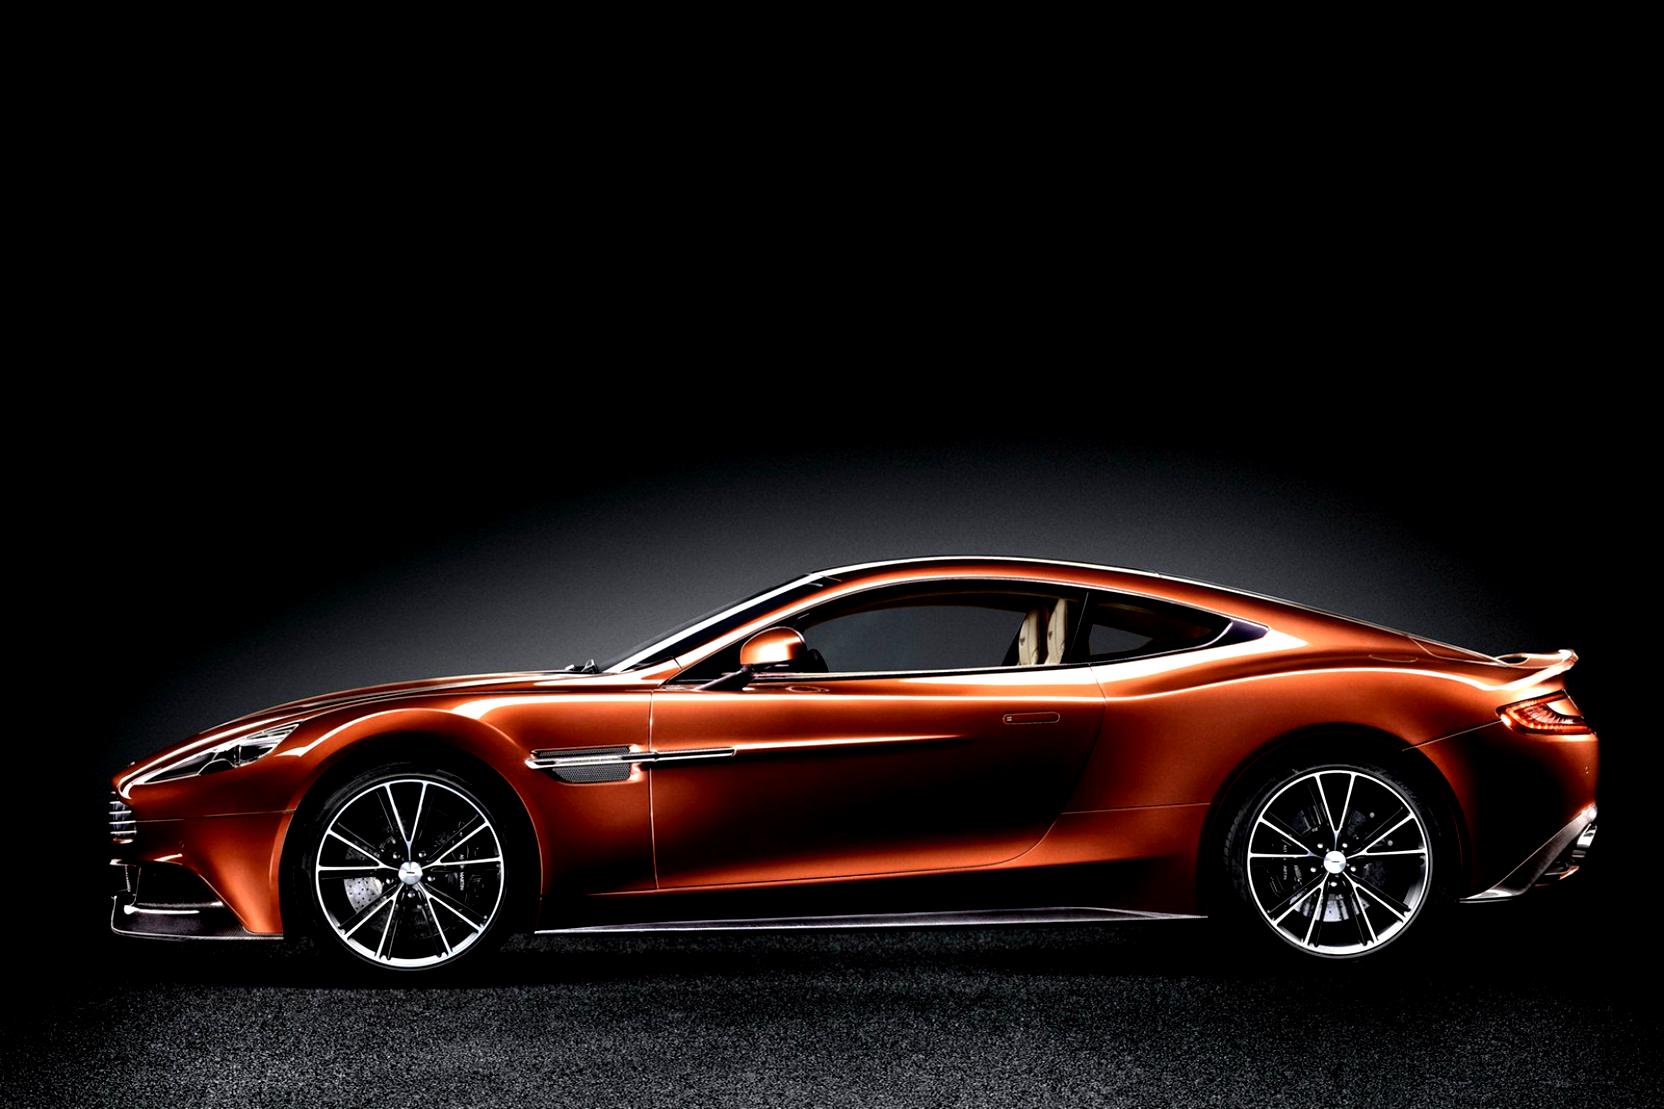 Aston Martin Vanquish 2012 #19